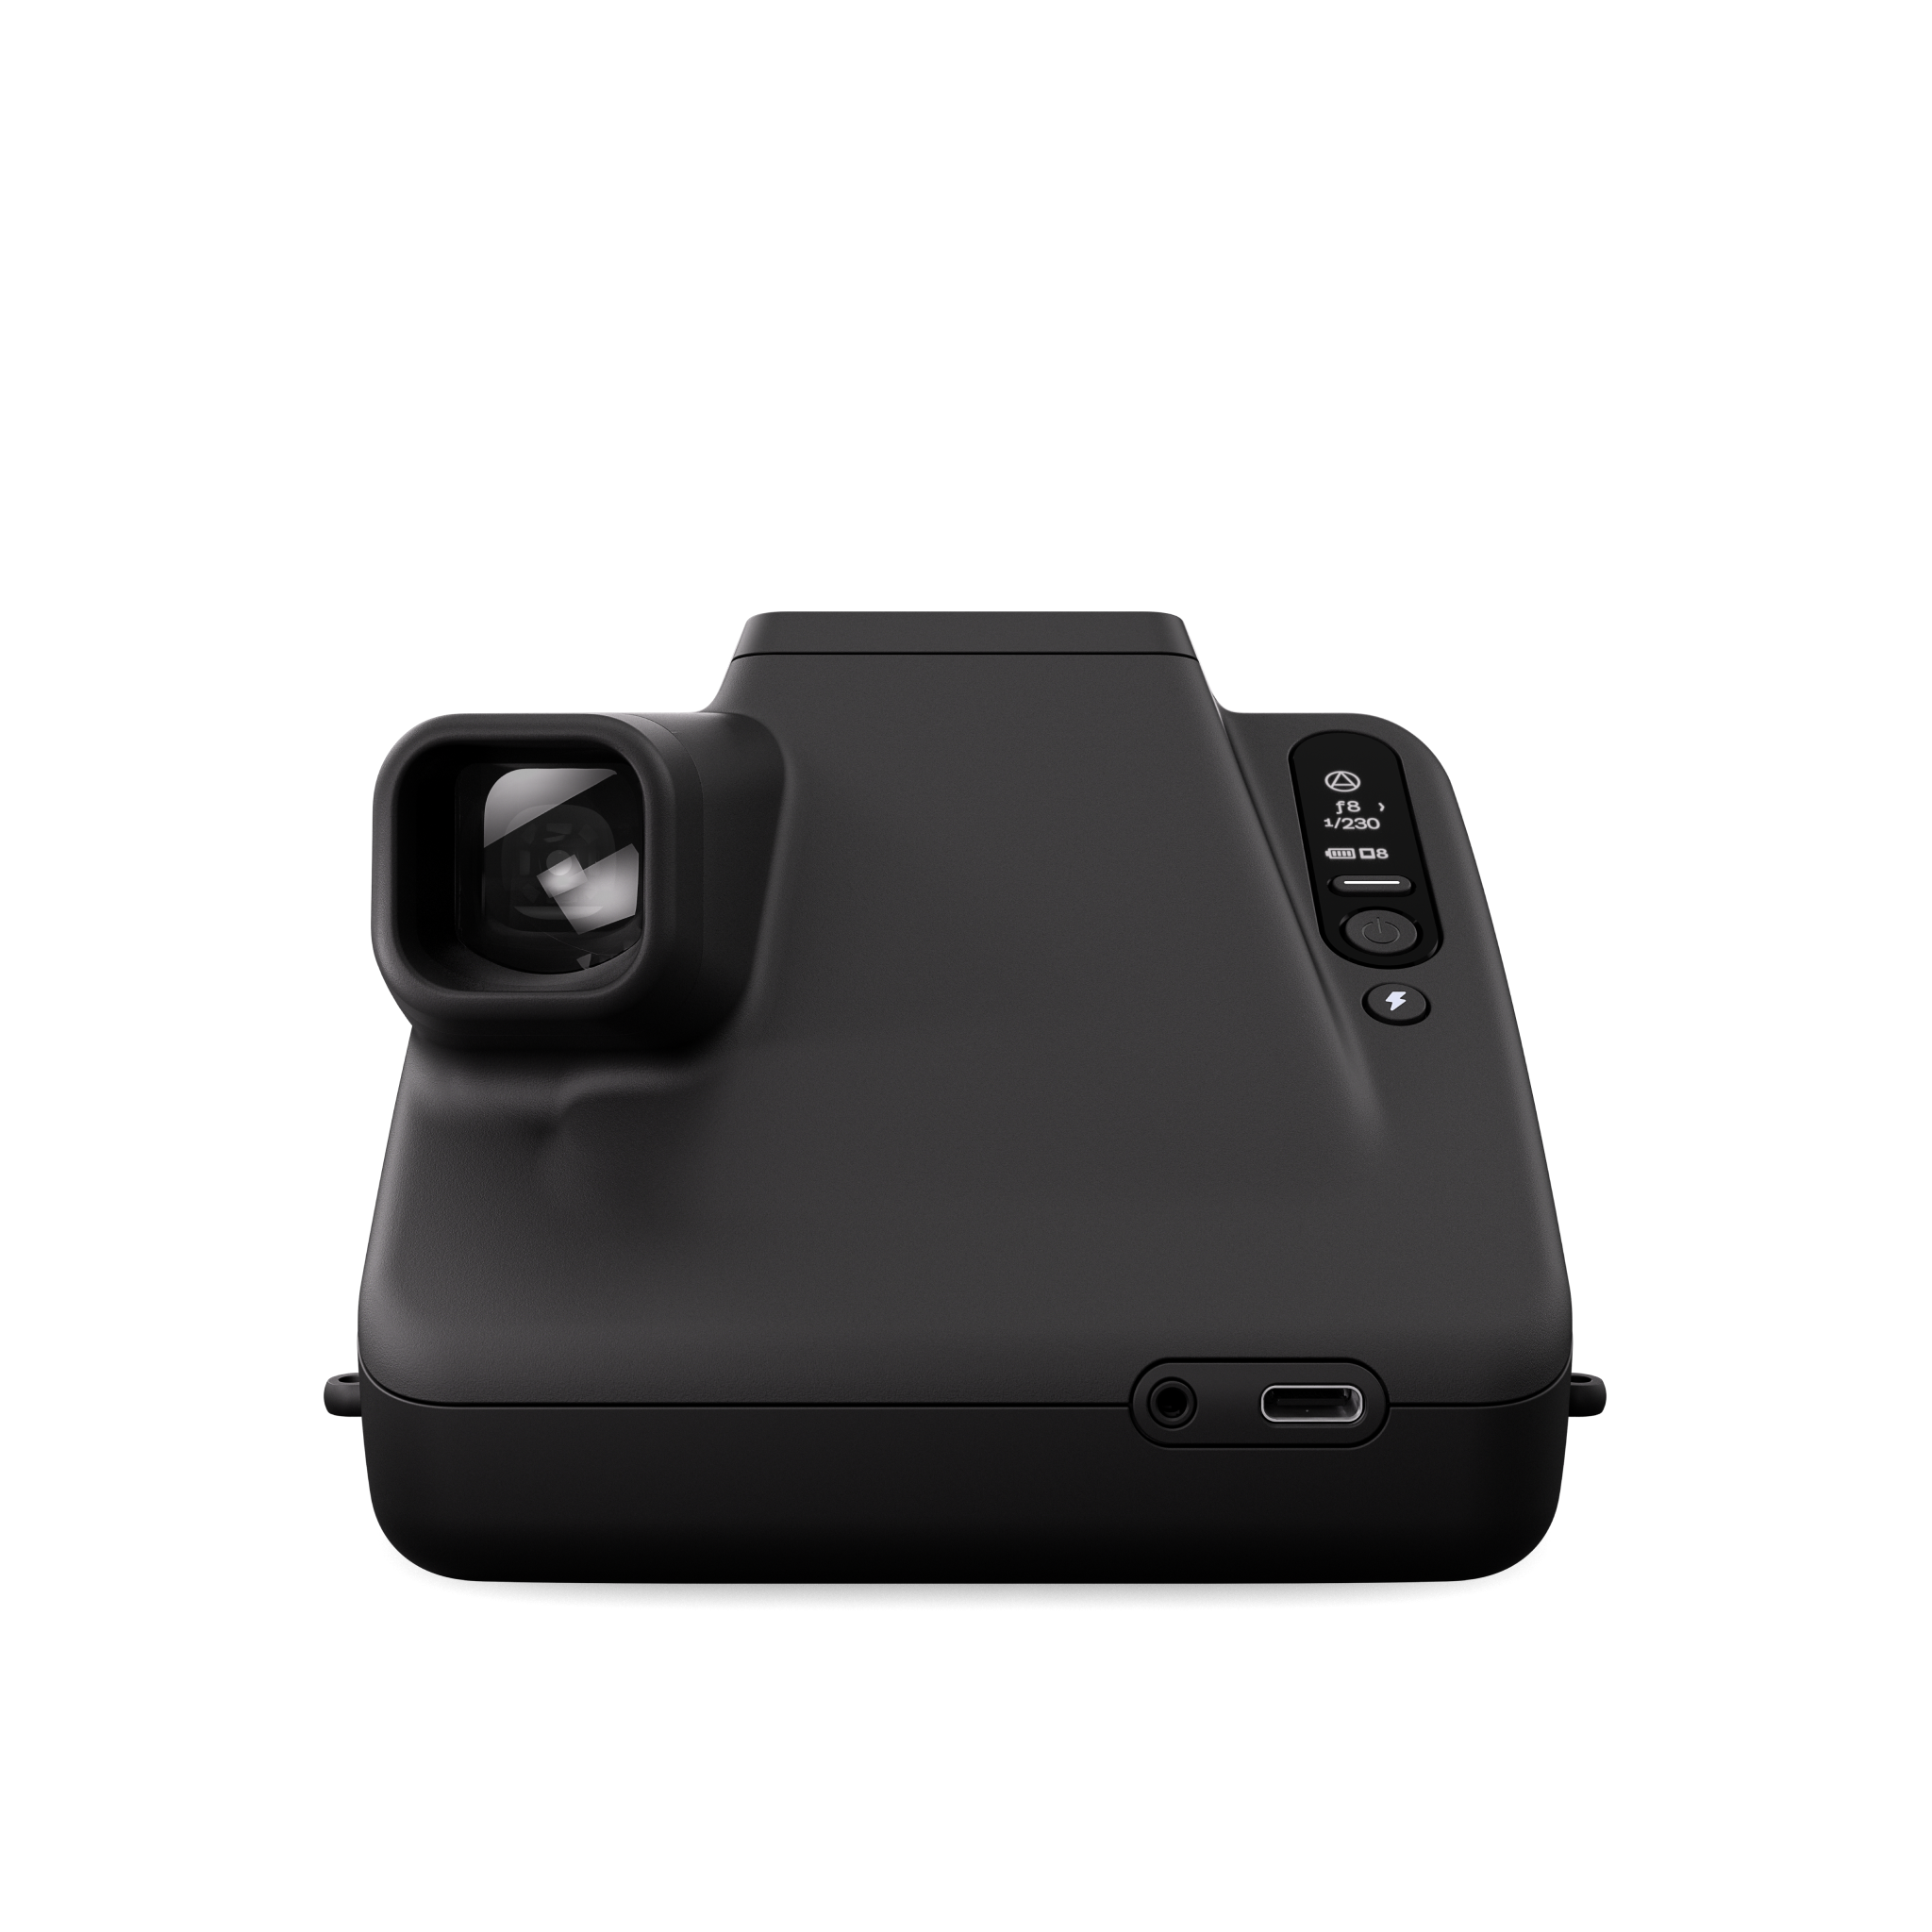 Polaroid I-2 Instant Camera (Black) 9078 B&H Photo Video